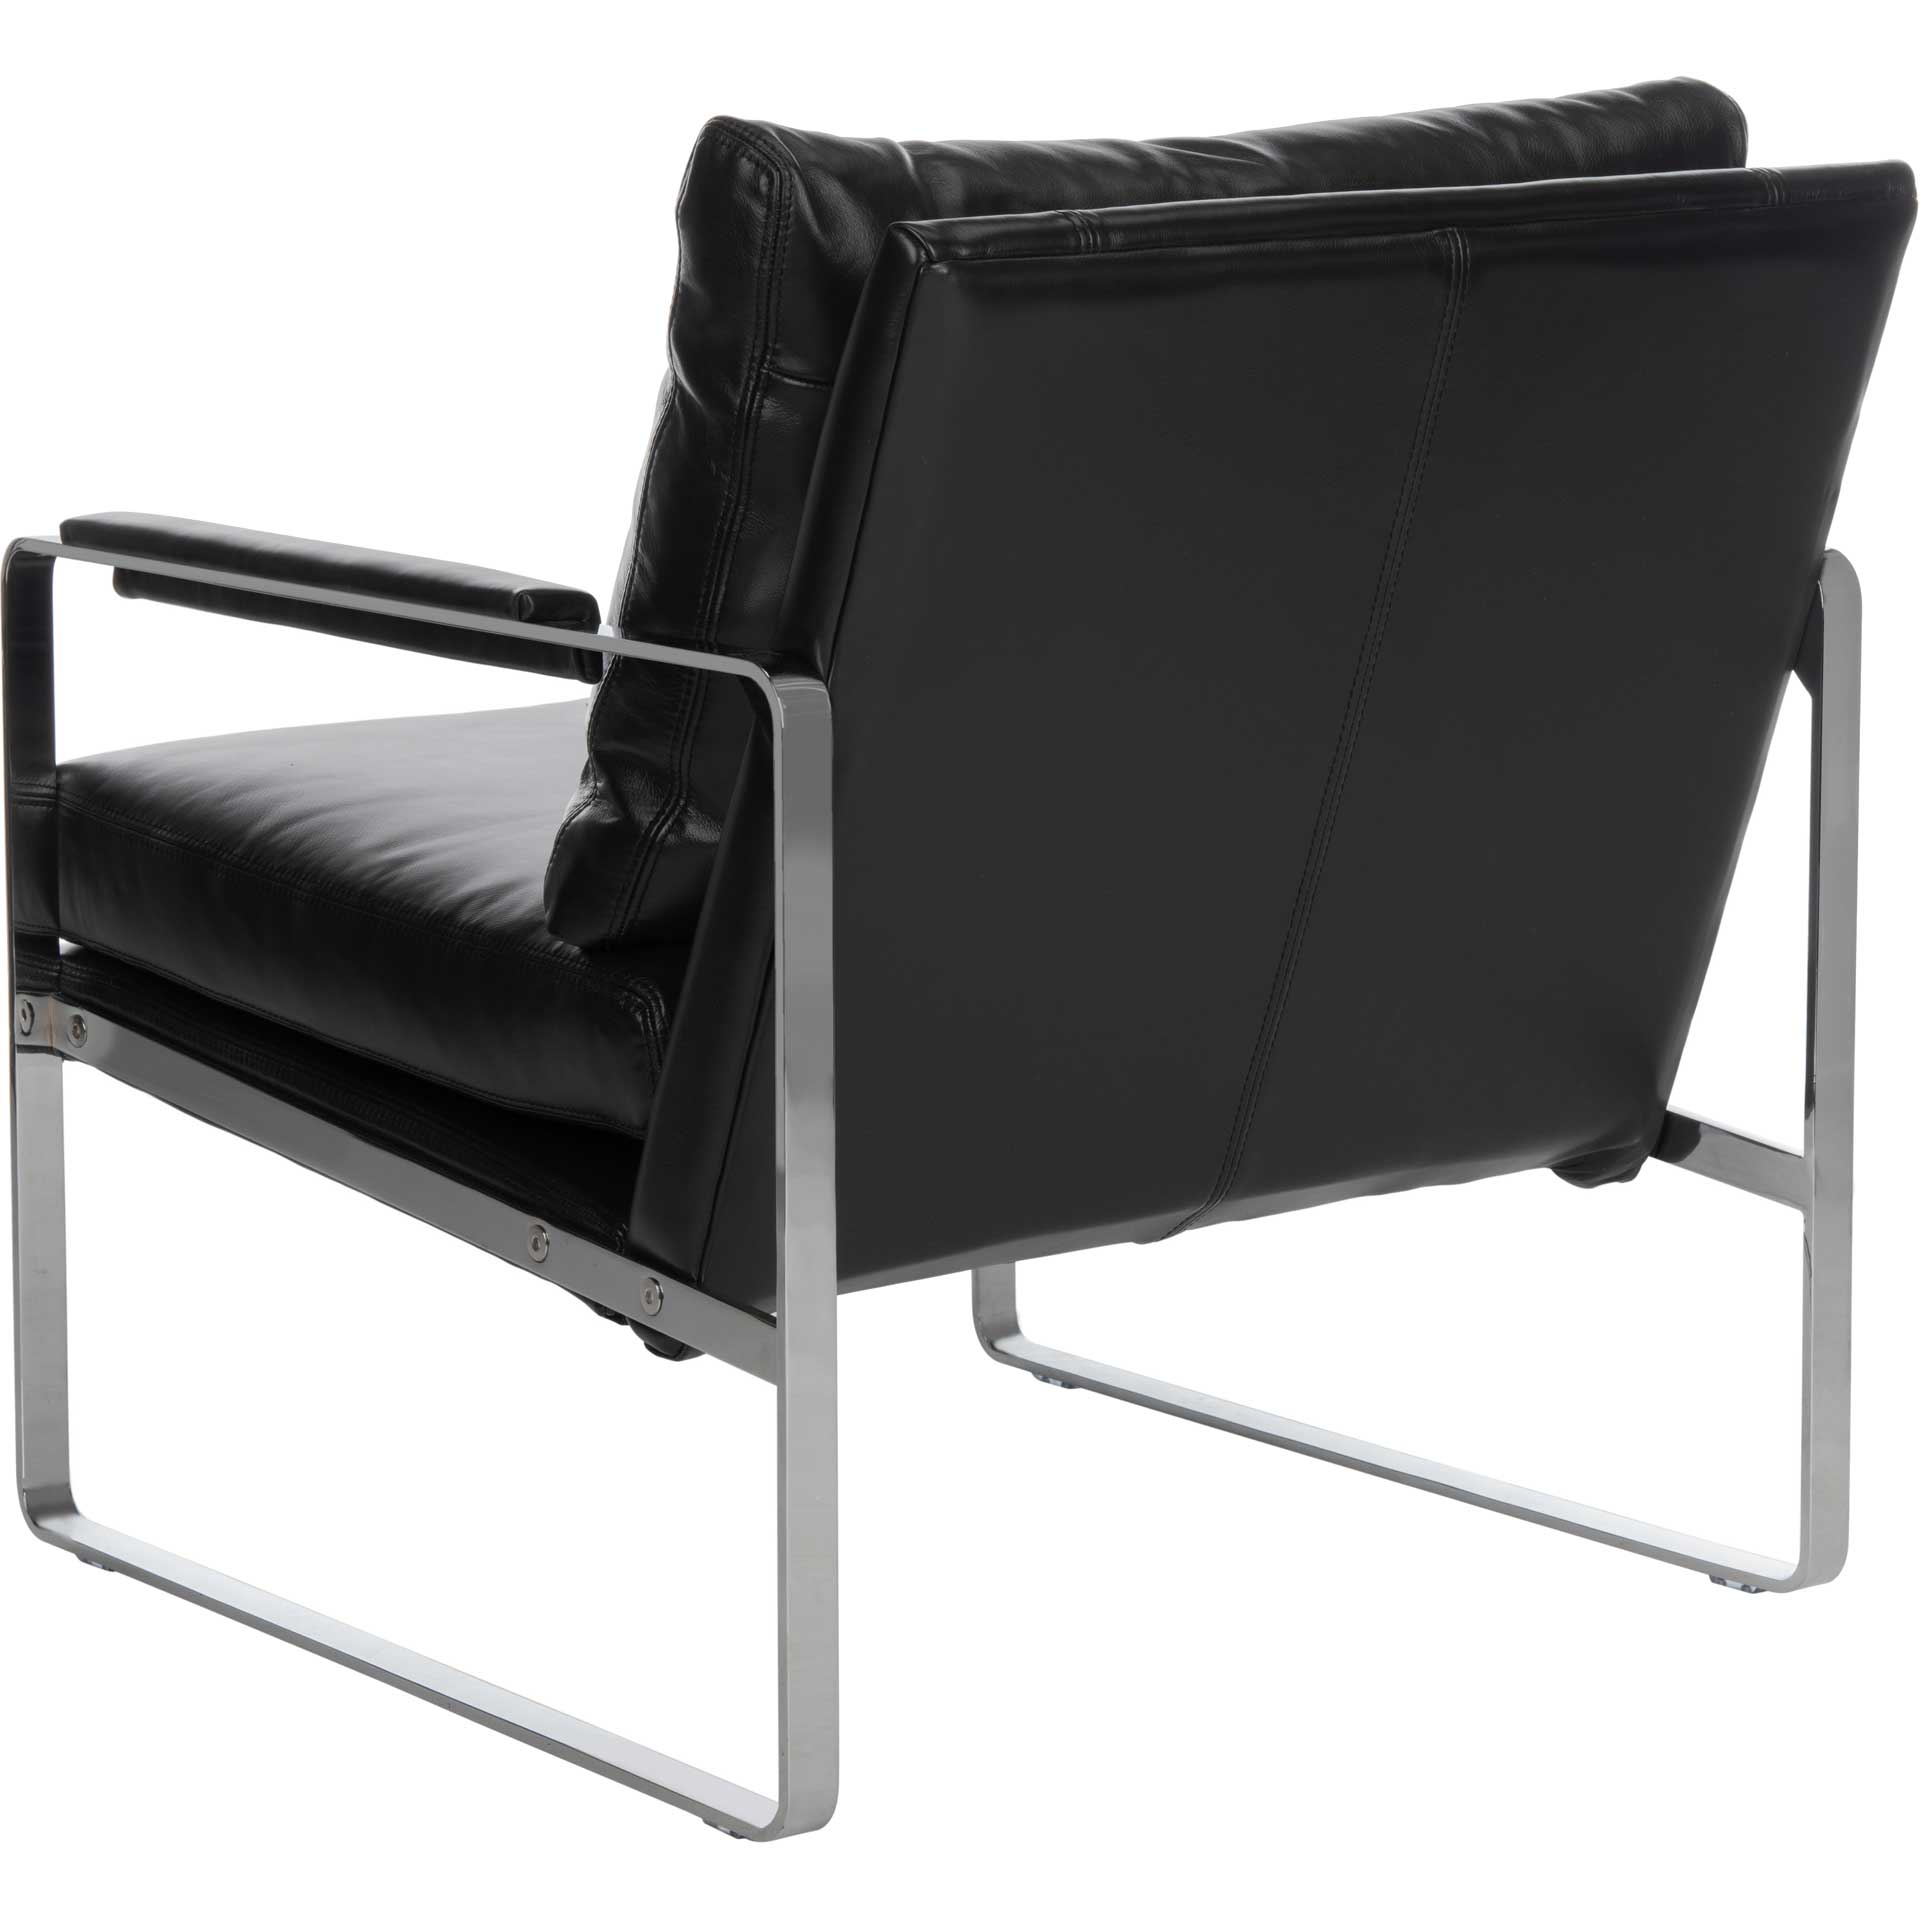 Estrella Metal Accent Chair Black/Silver